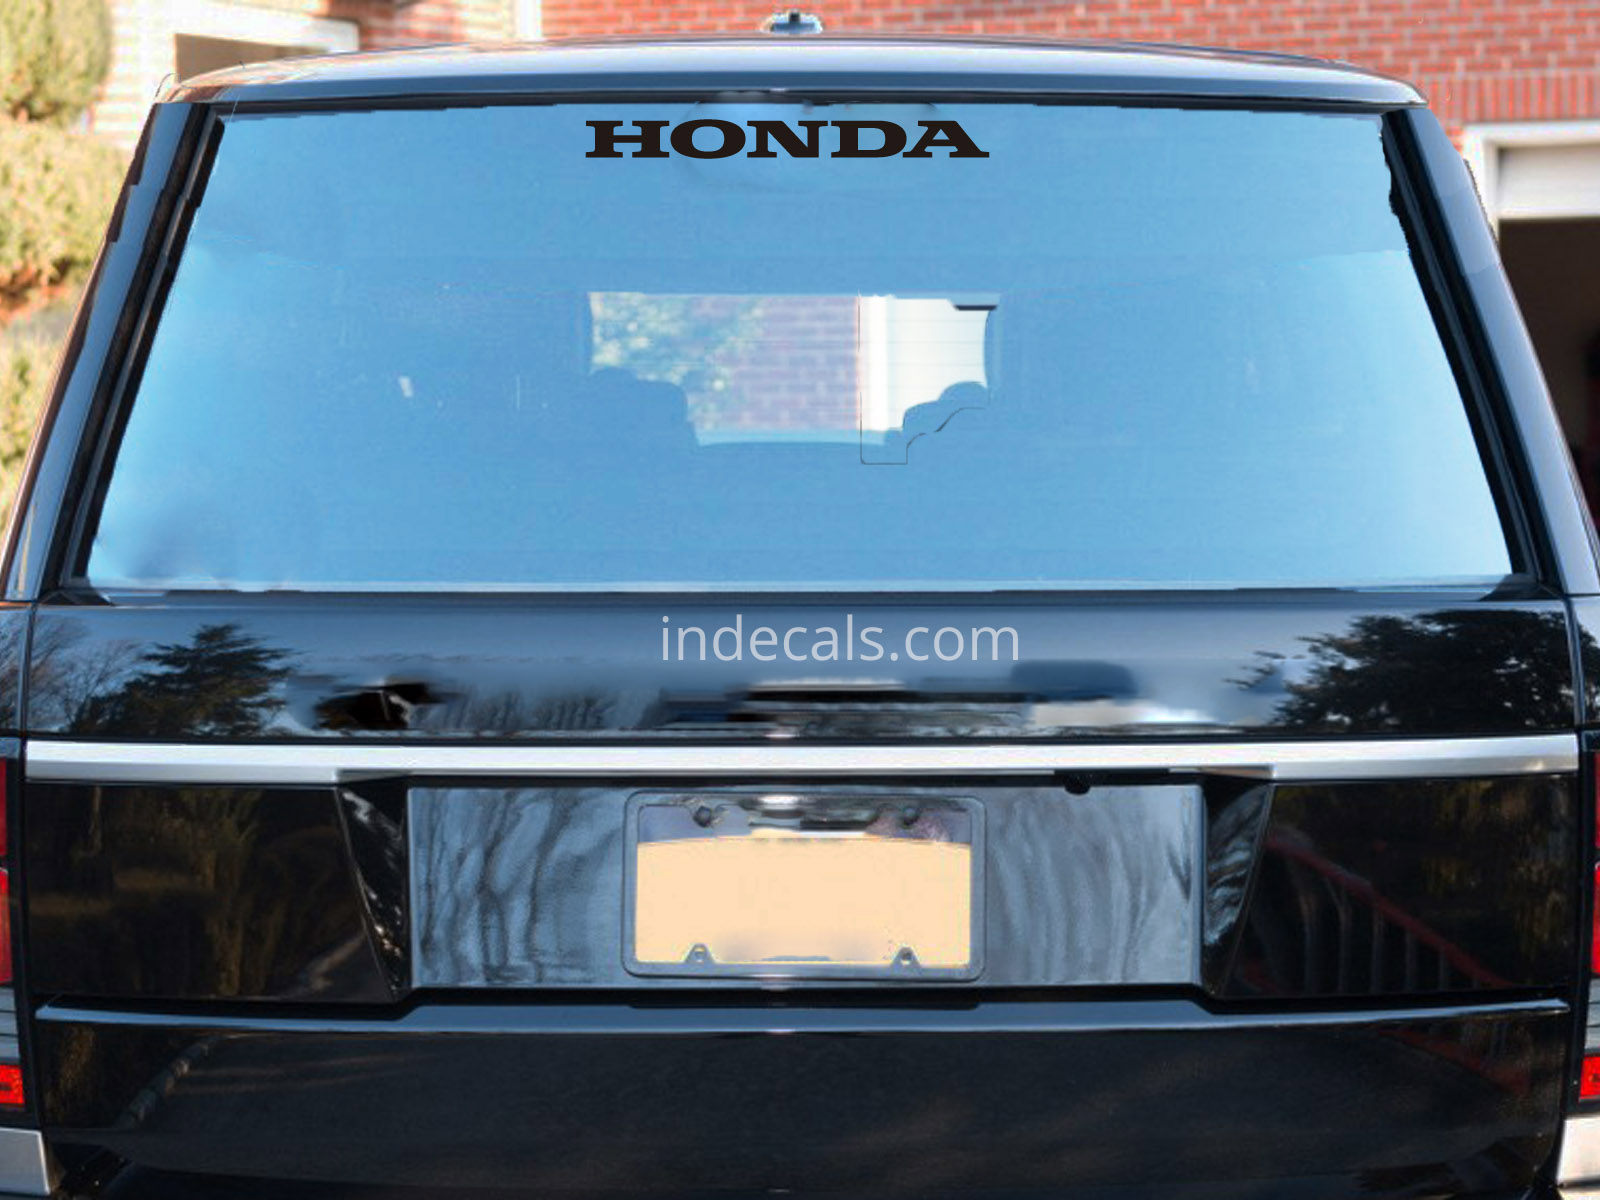 1 x Honda Sticker for Windshield or Back Window - Black